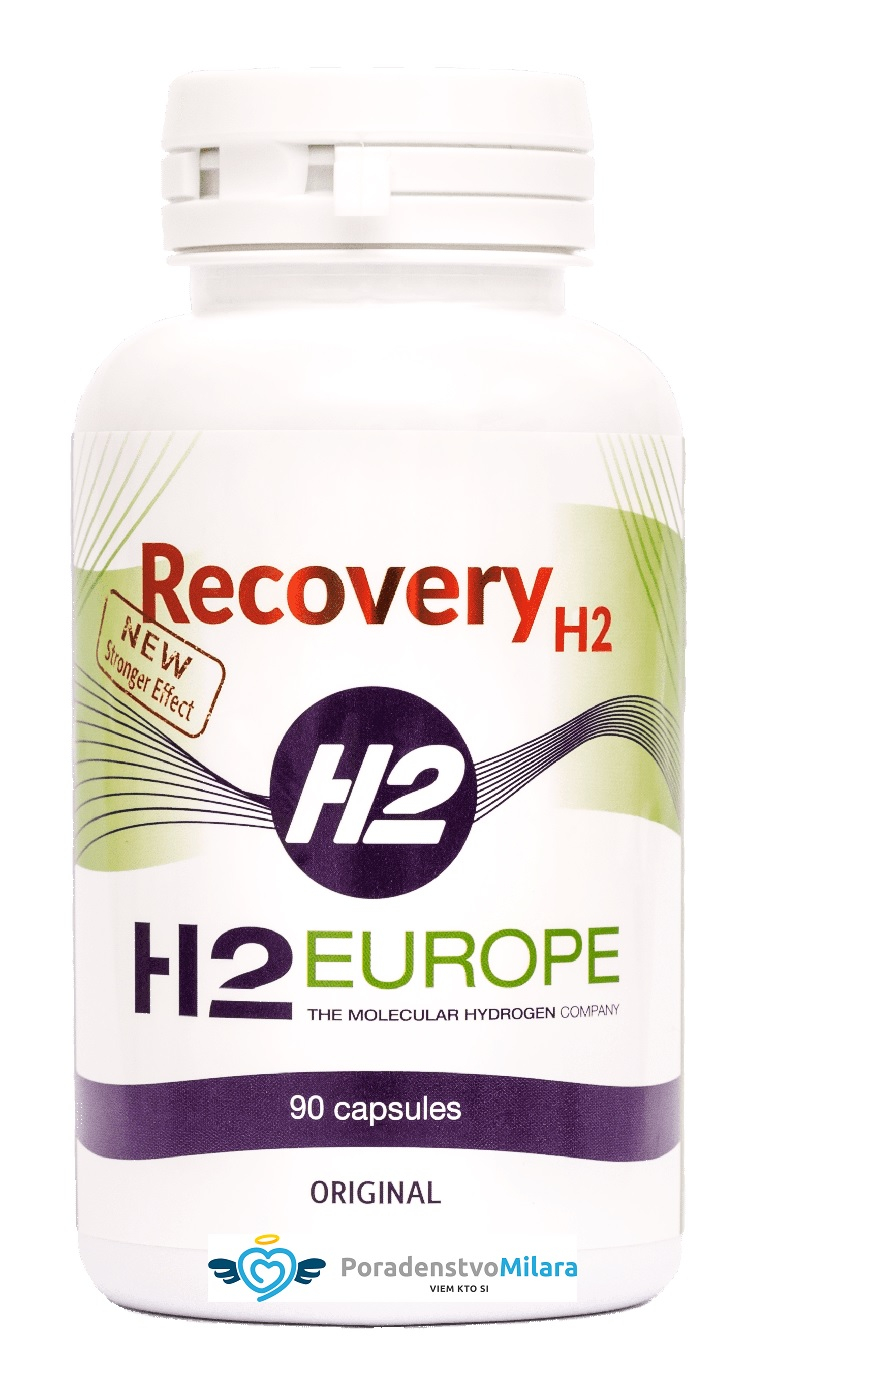 Recovery H2 molecular hydrogen